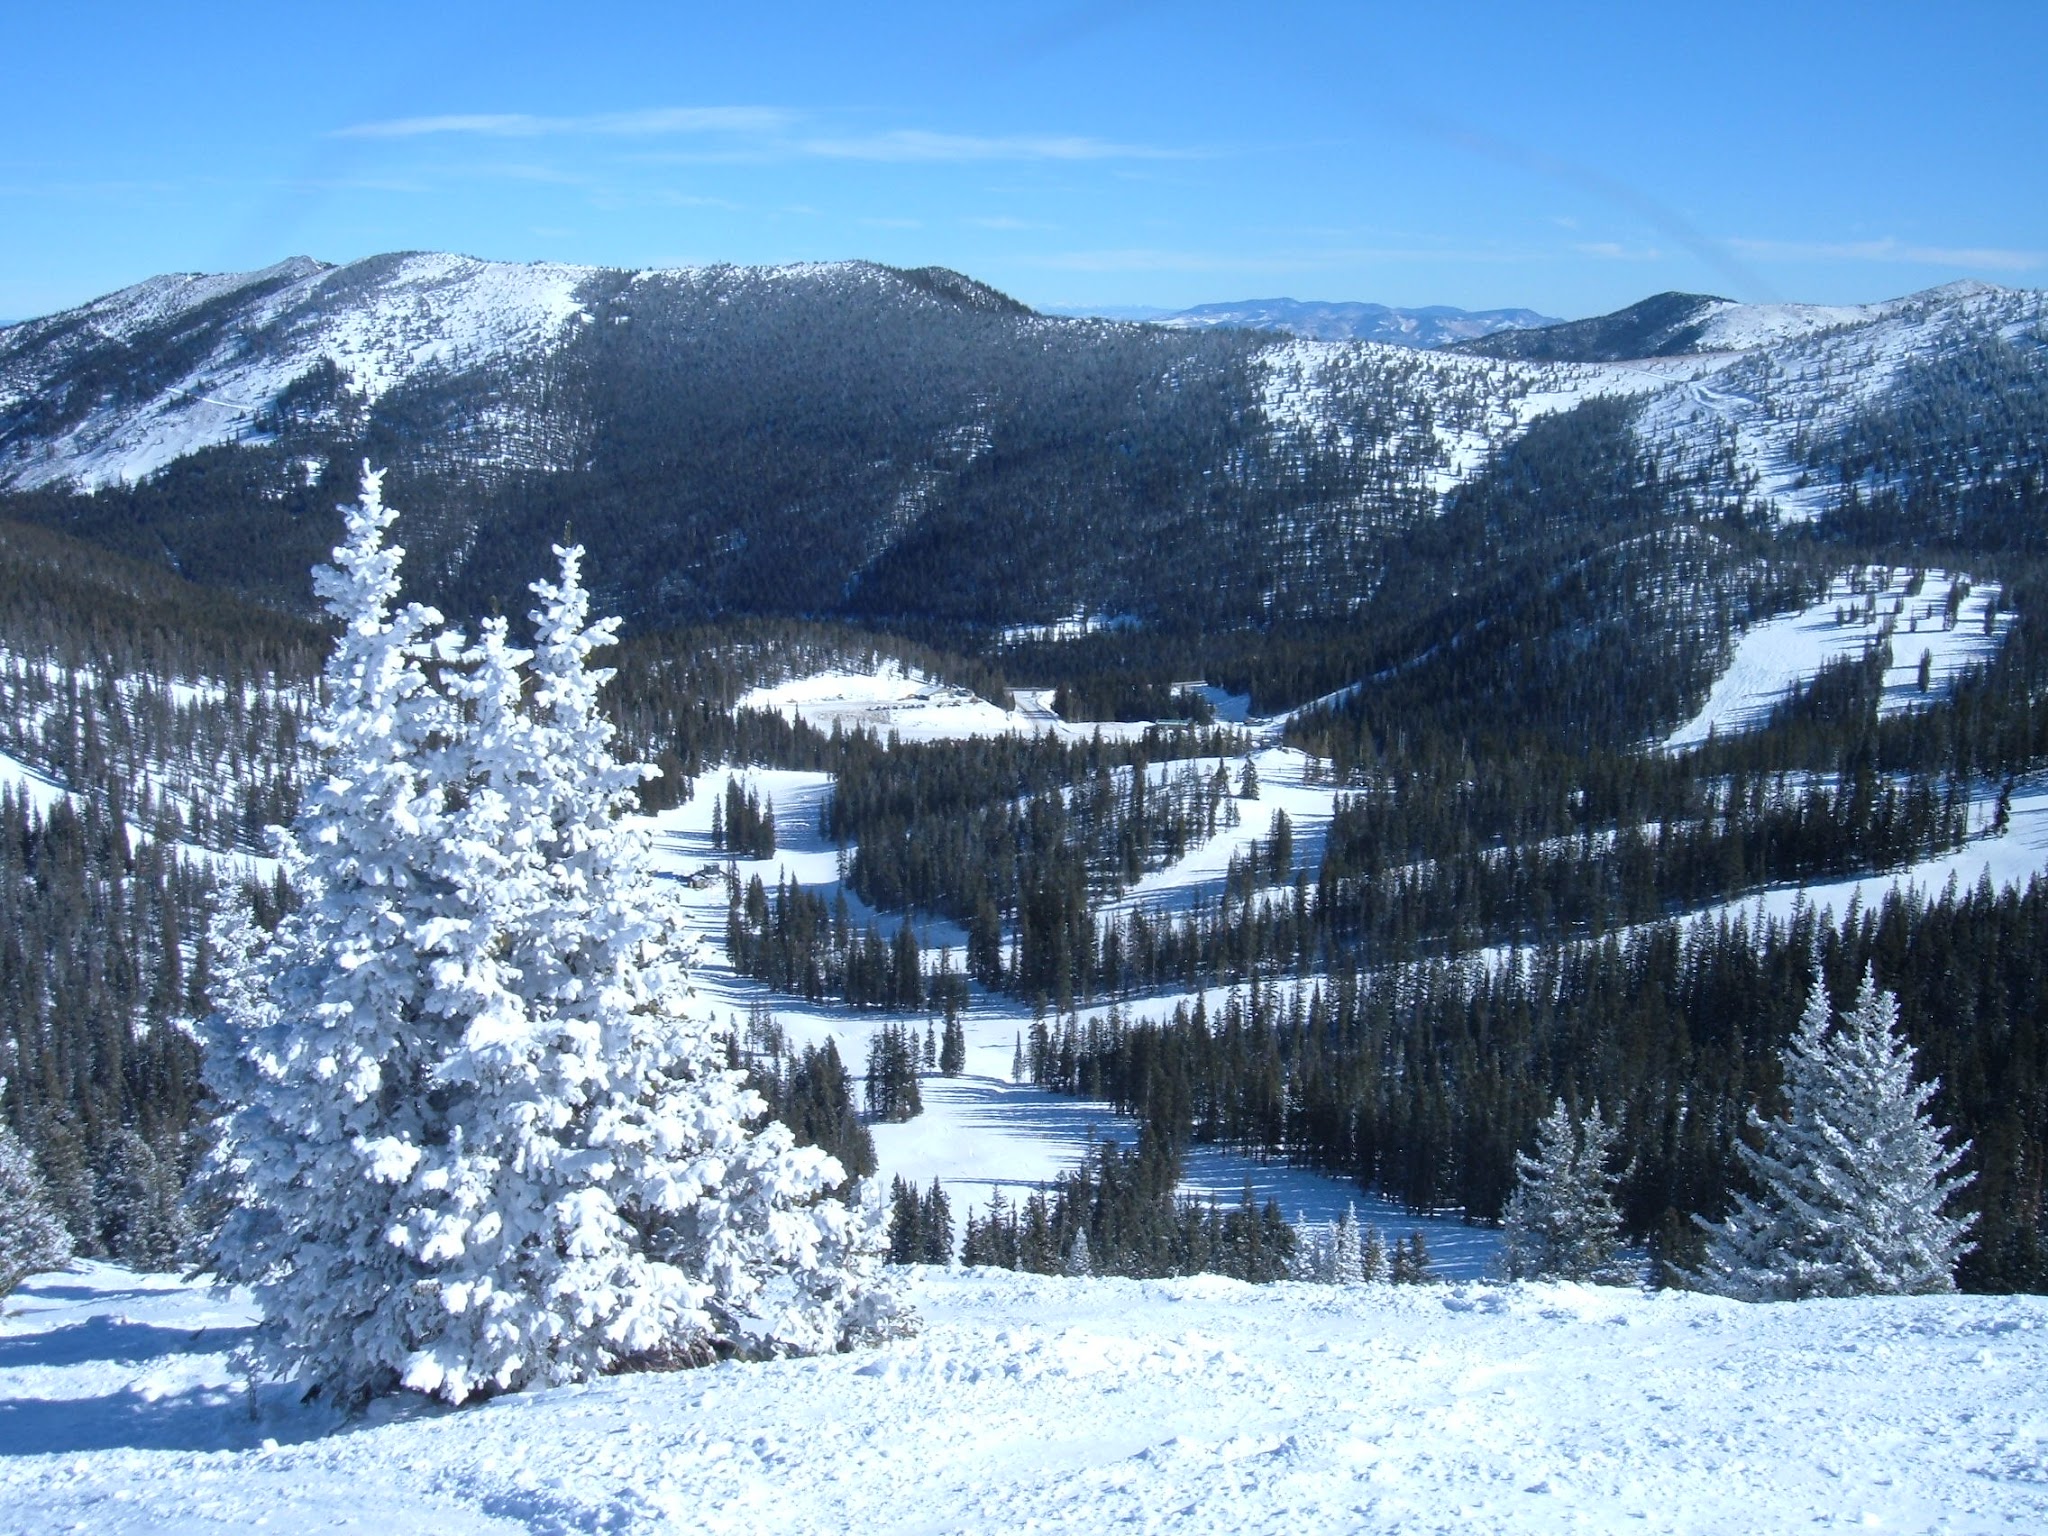 Winter scene overlooking a ski area.